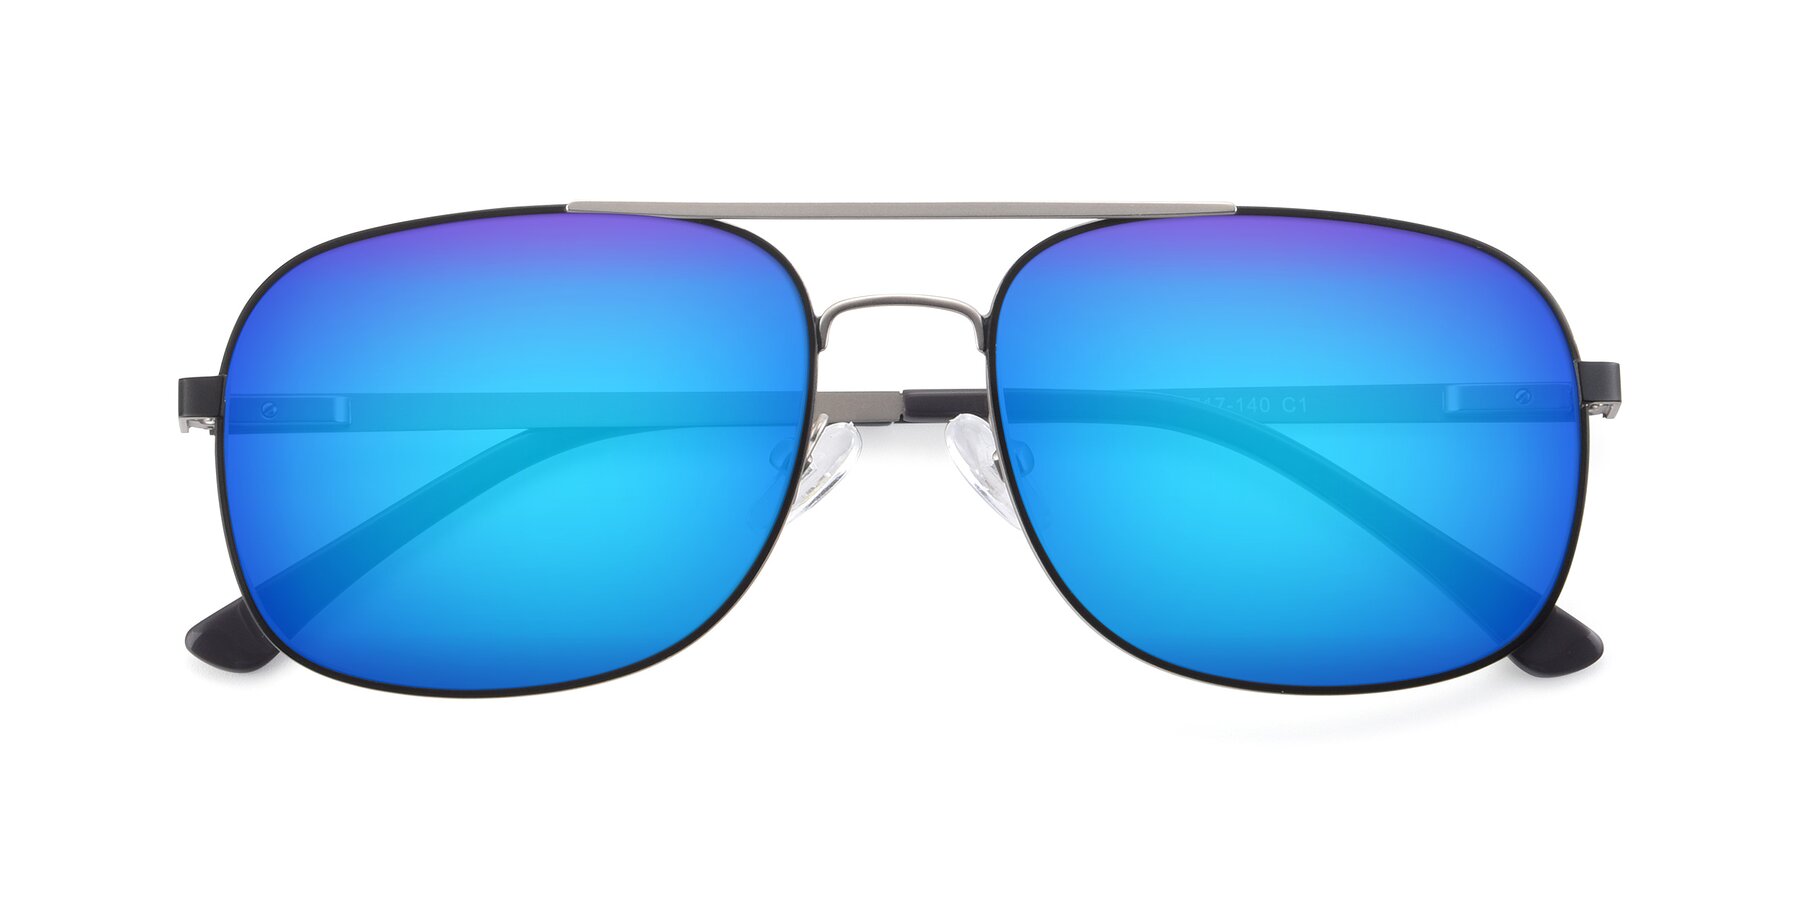 Black-Silver Oversized Grandpa Square Polarized Sunglasses with Gray  Sunwear Lenses - 9487